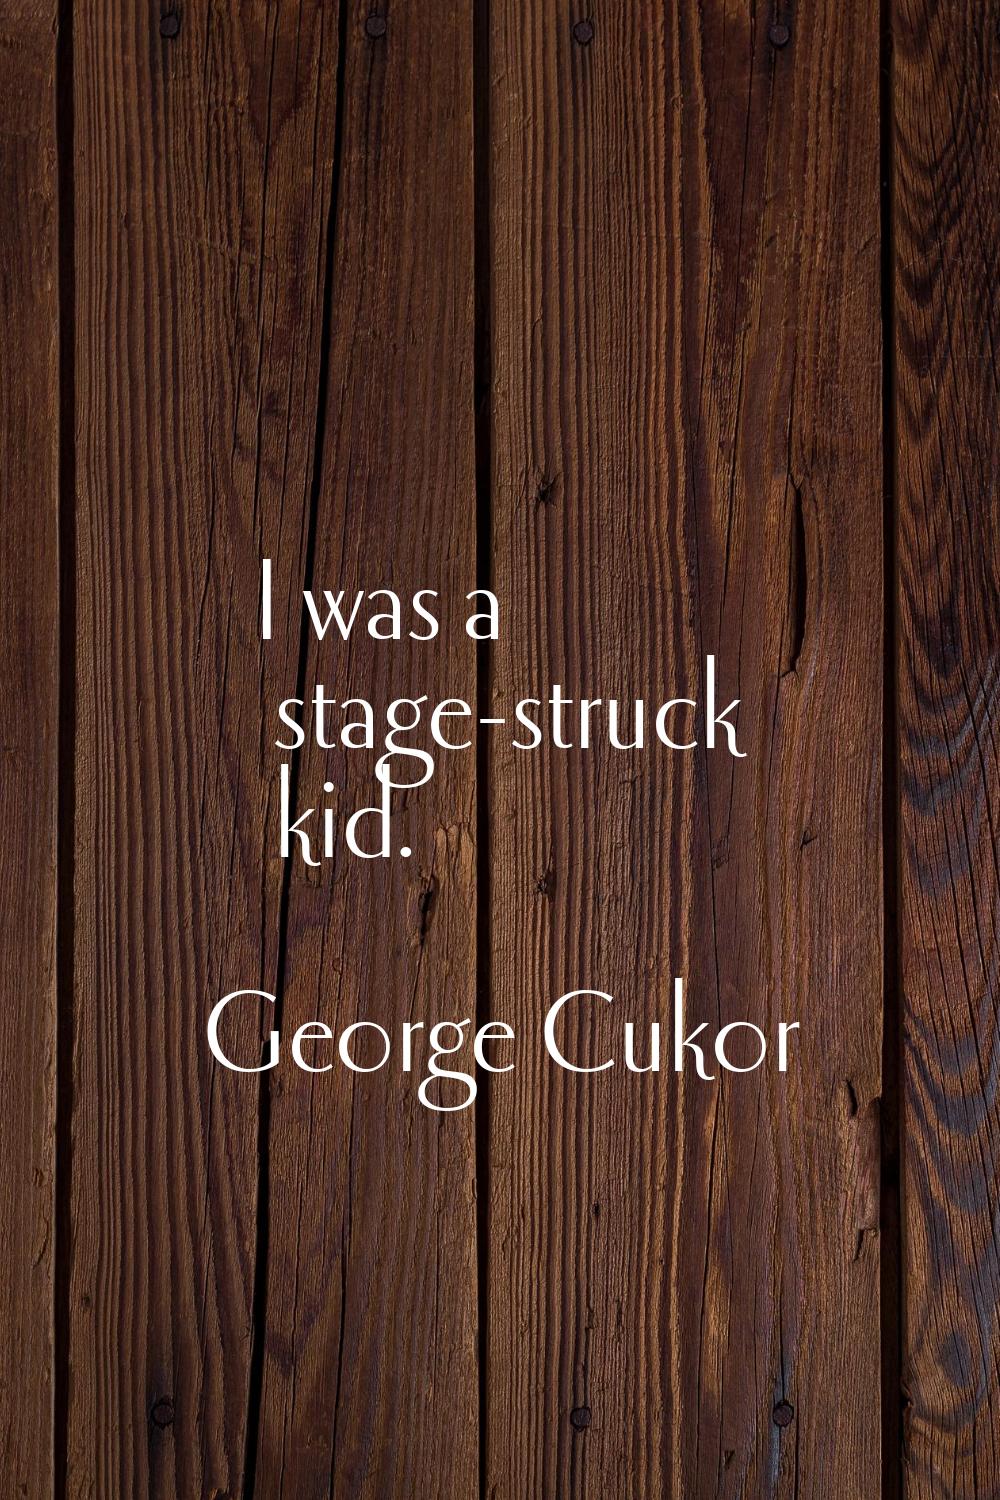 I was a stage-struck kid.